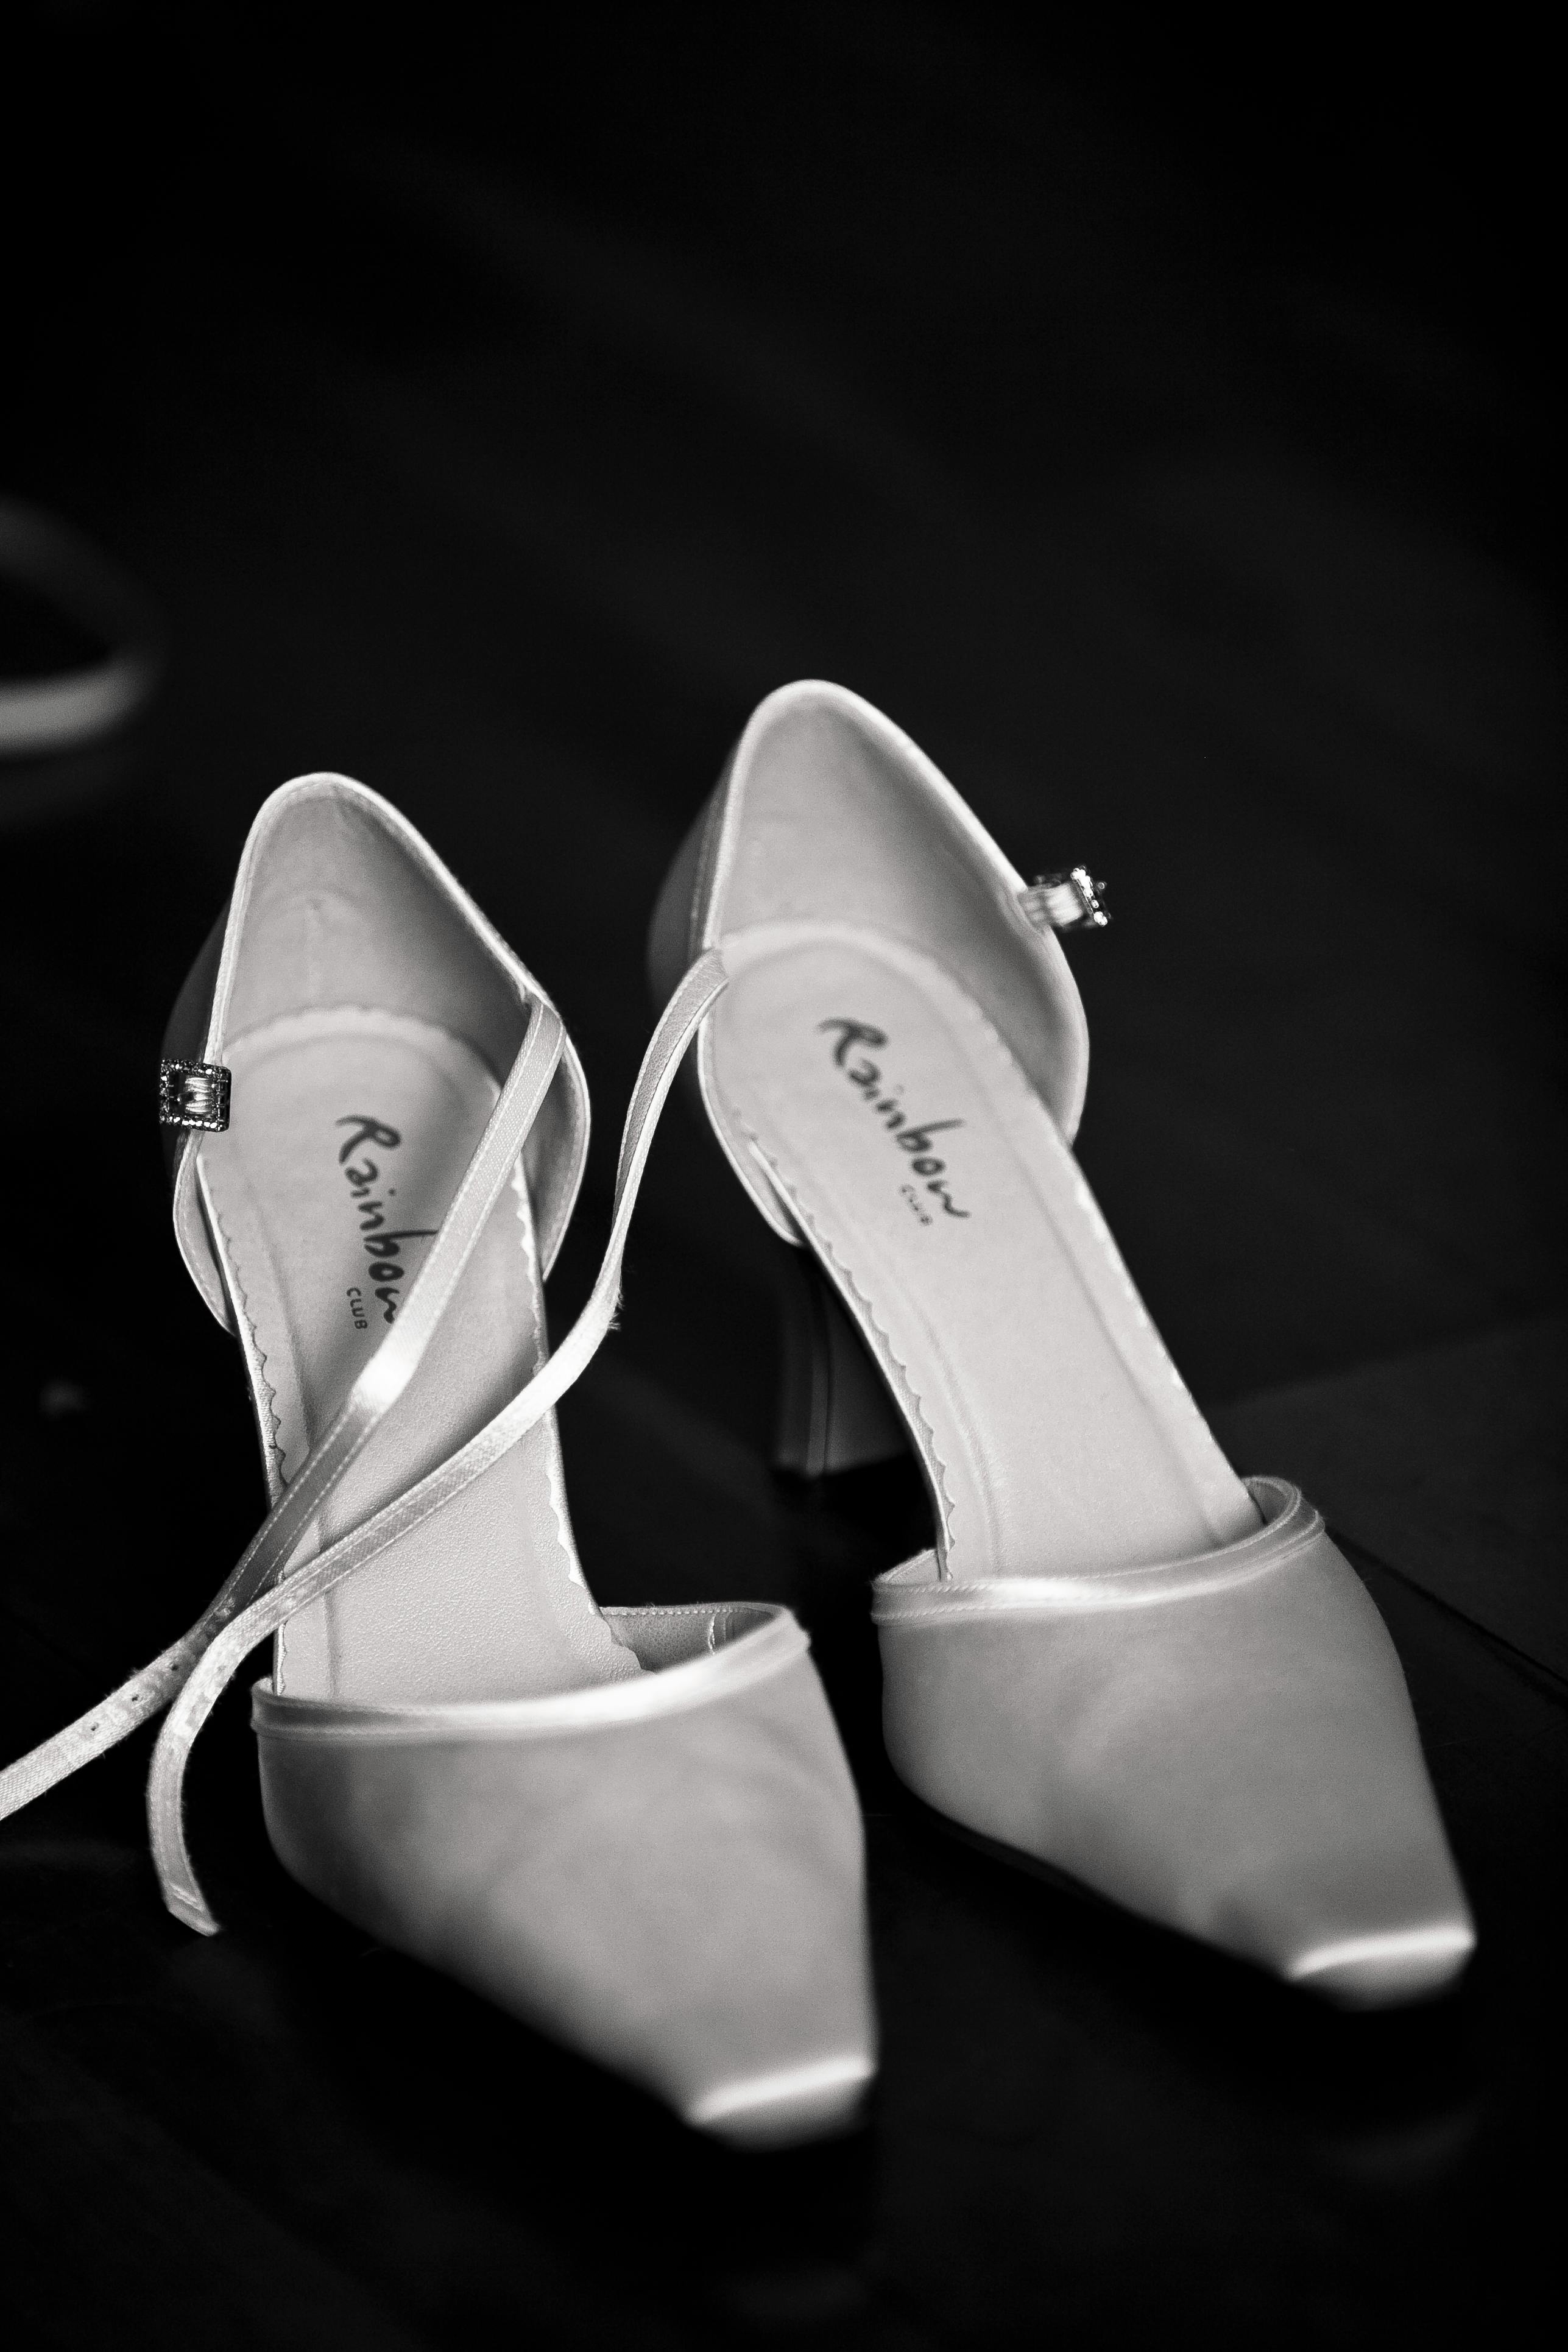 gray rainbow heeled sandals on black surface